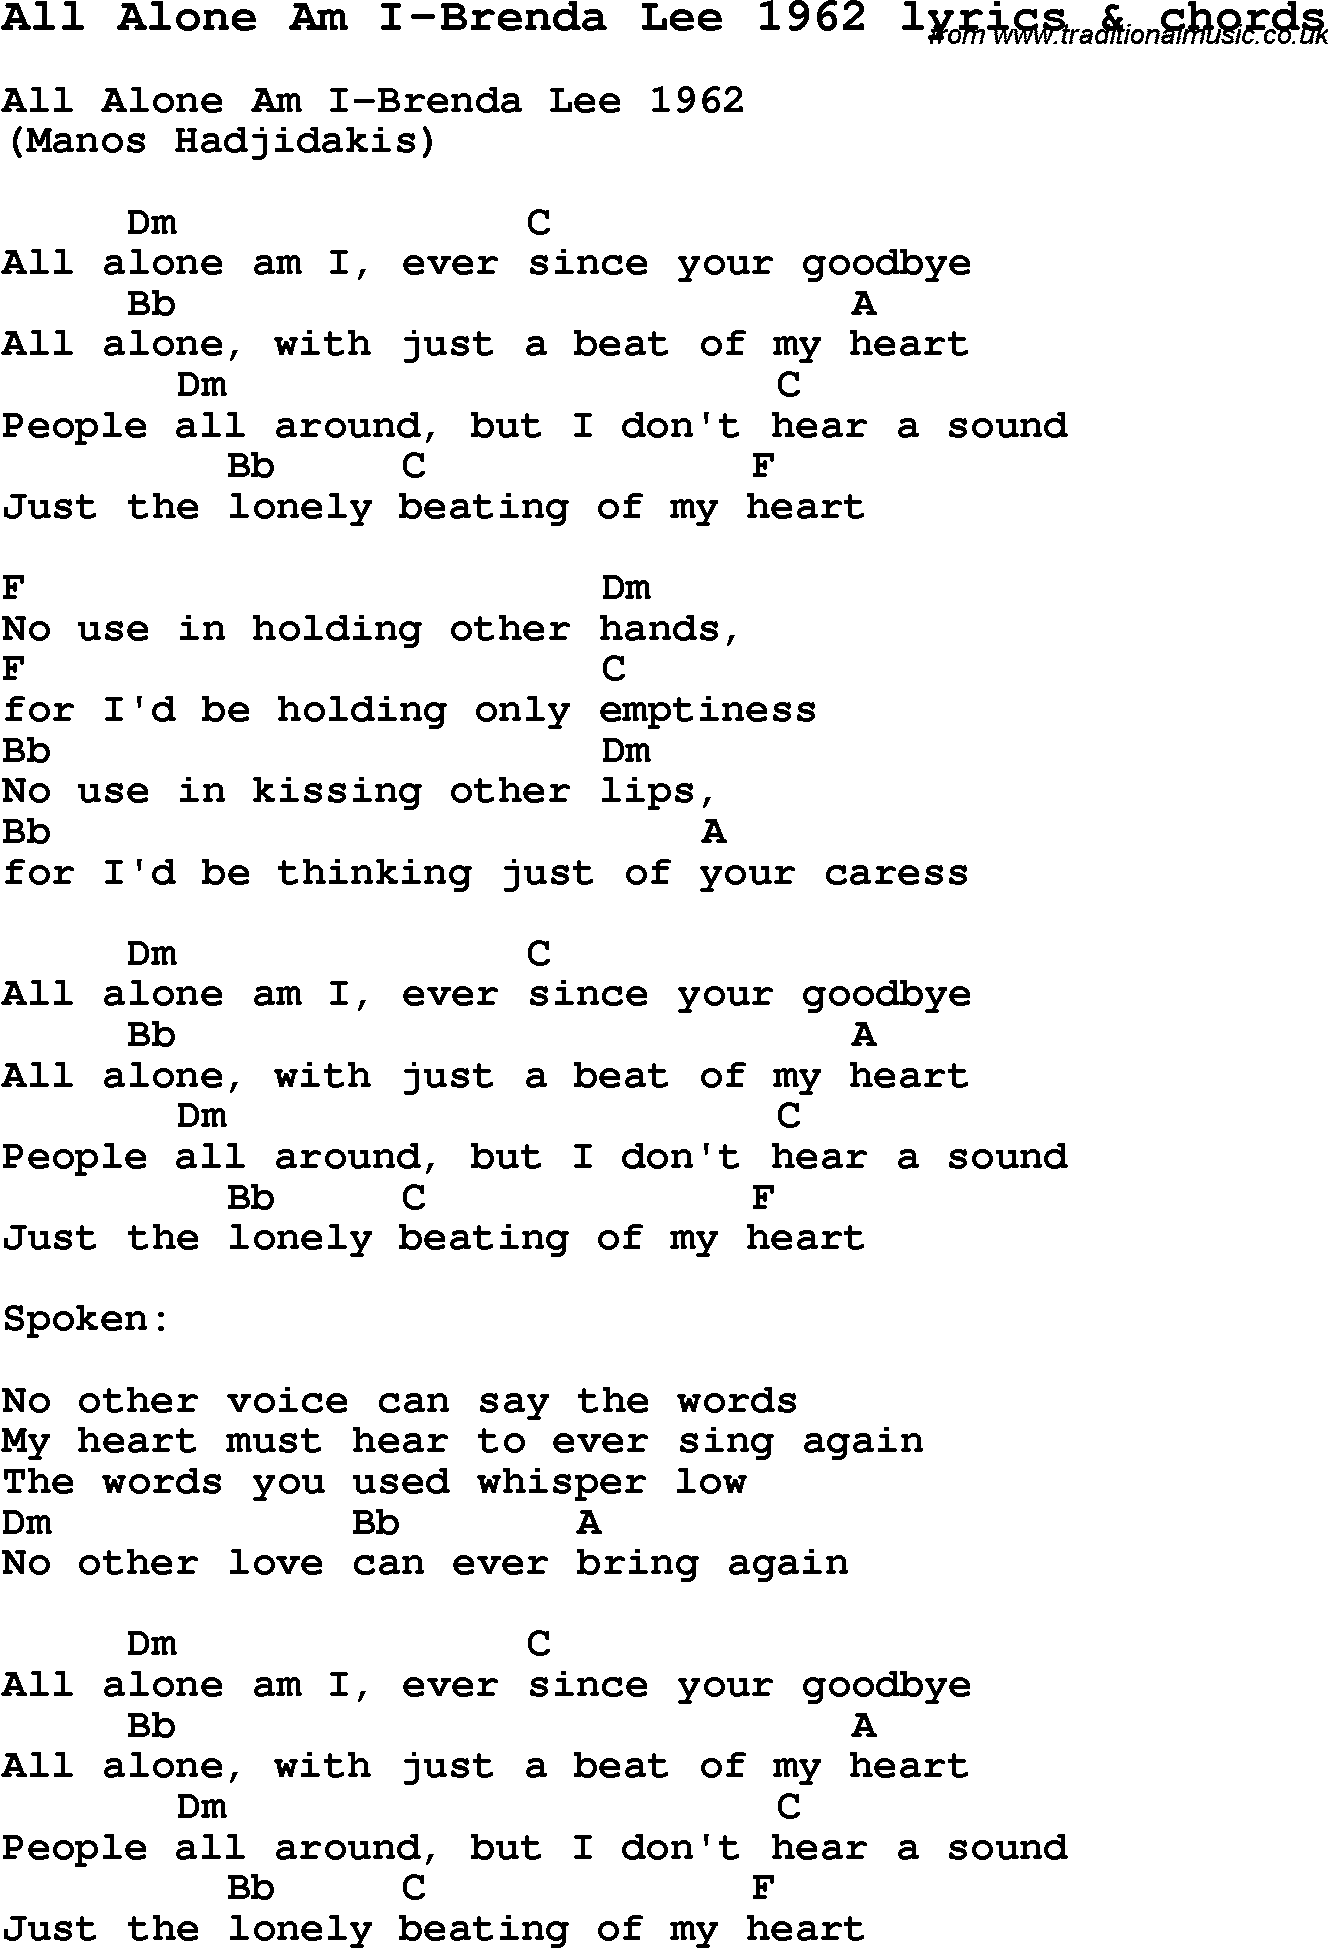 Love Song Lyrics for: All Alone Am I-Brenda Lee 1962 with chords for Ukulele, Guitar Banjo etc.